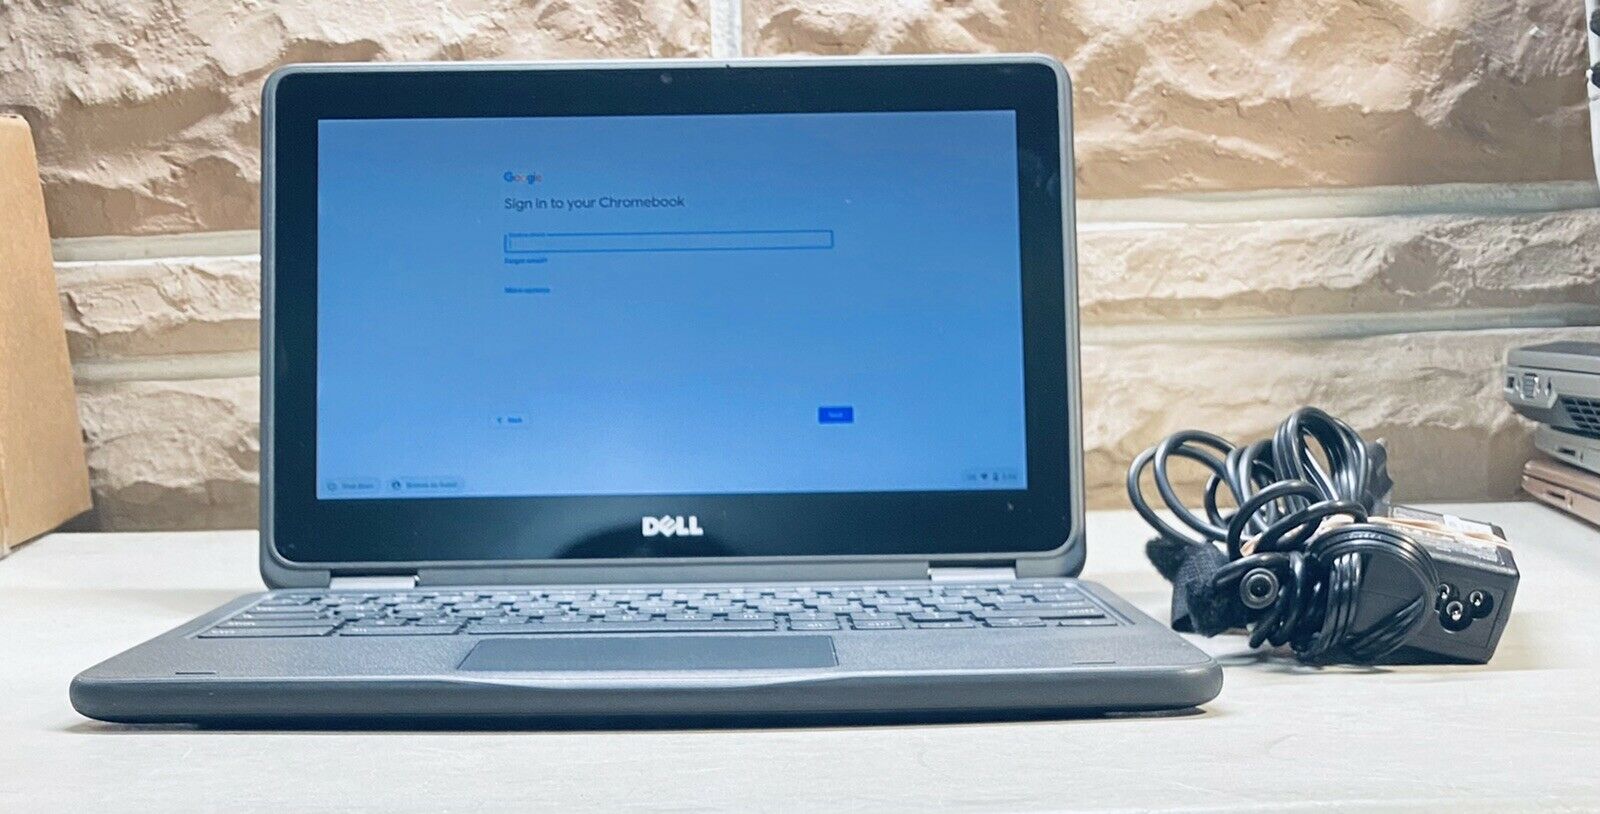 Dell Chromebook 11 3189 2 in 1 TouchScreen Intel Celeron 16GB 4GB RAM Laptop